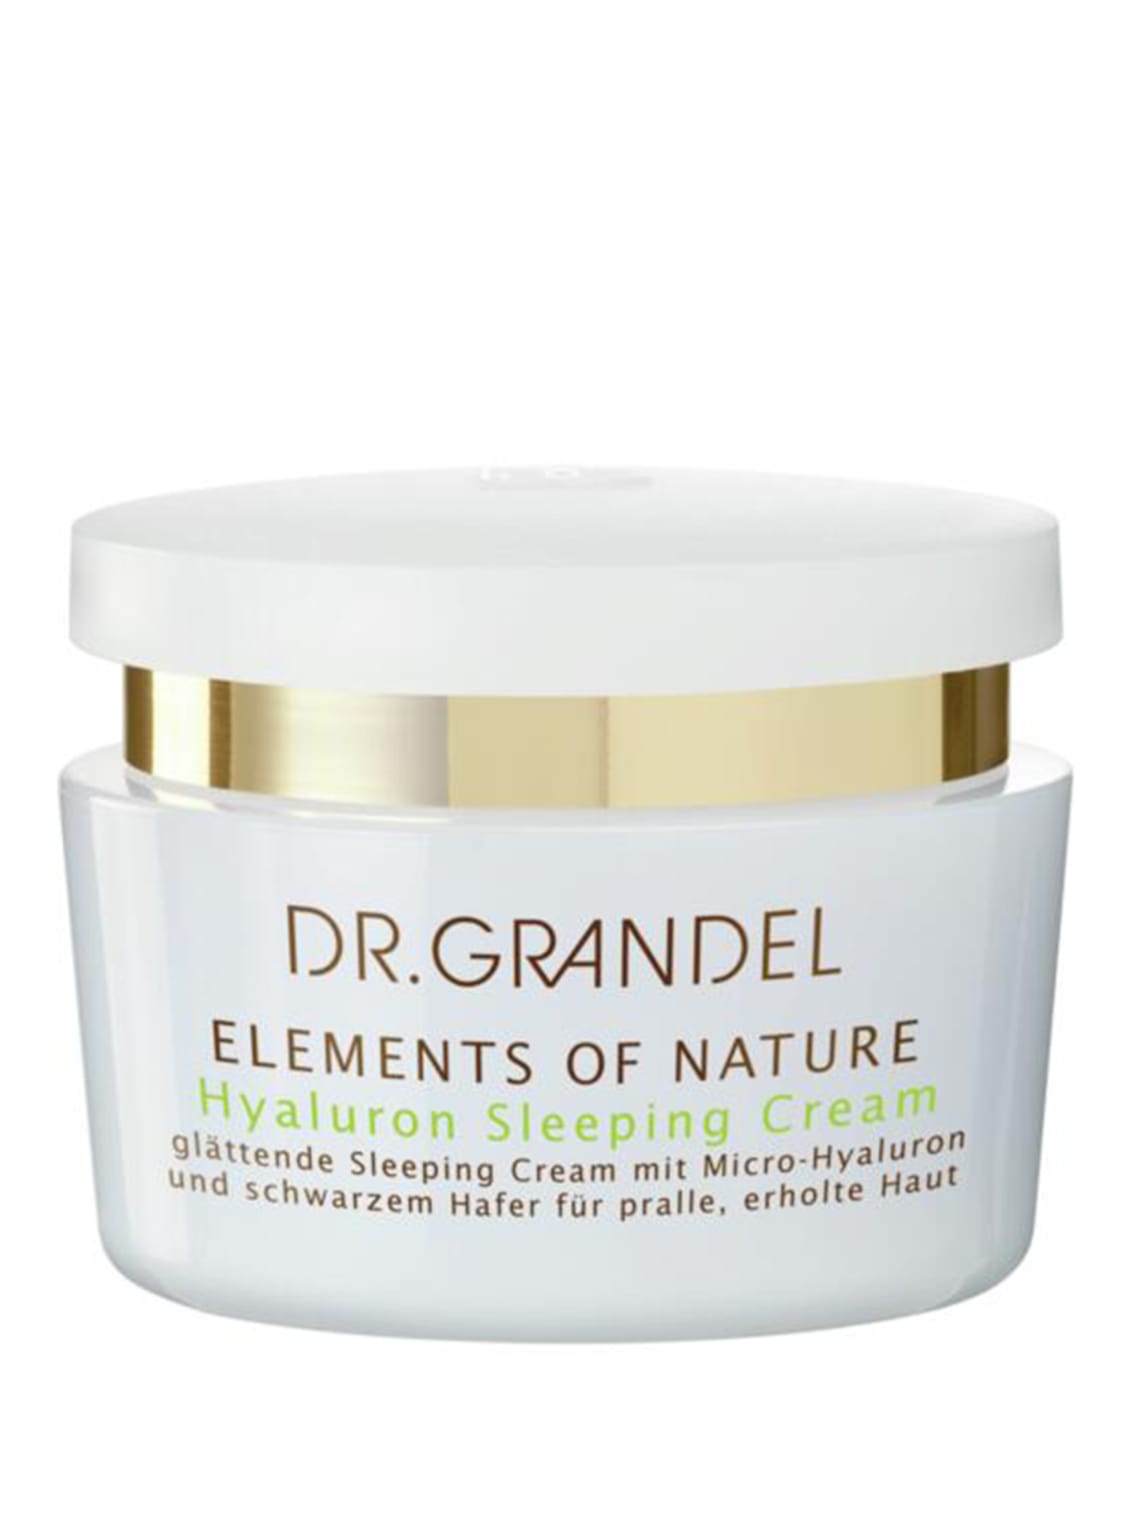 Dr. Grandel Elements Of Nature - Anti Age Glättende 24 h Pflegecreme 50 ml von DR. GRANDEL